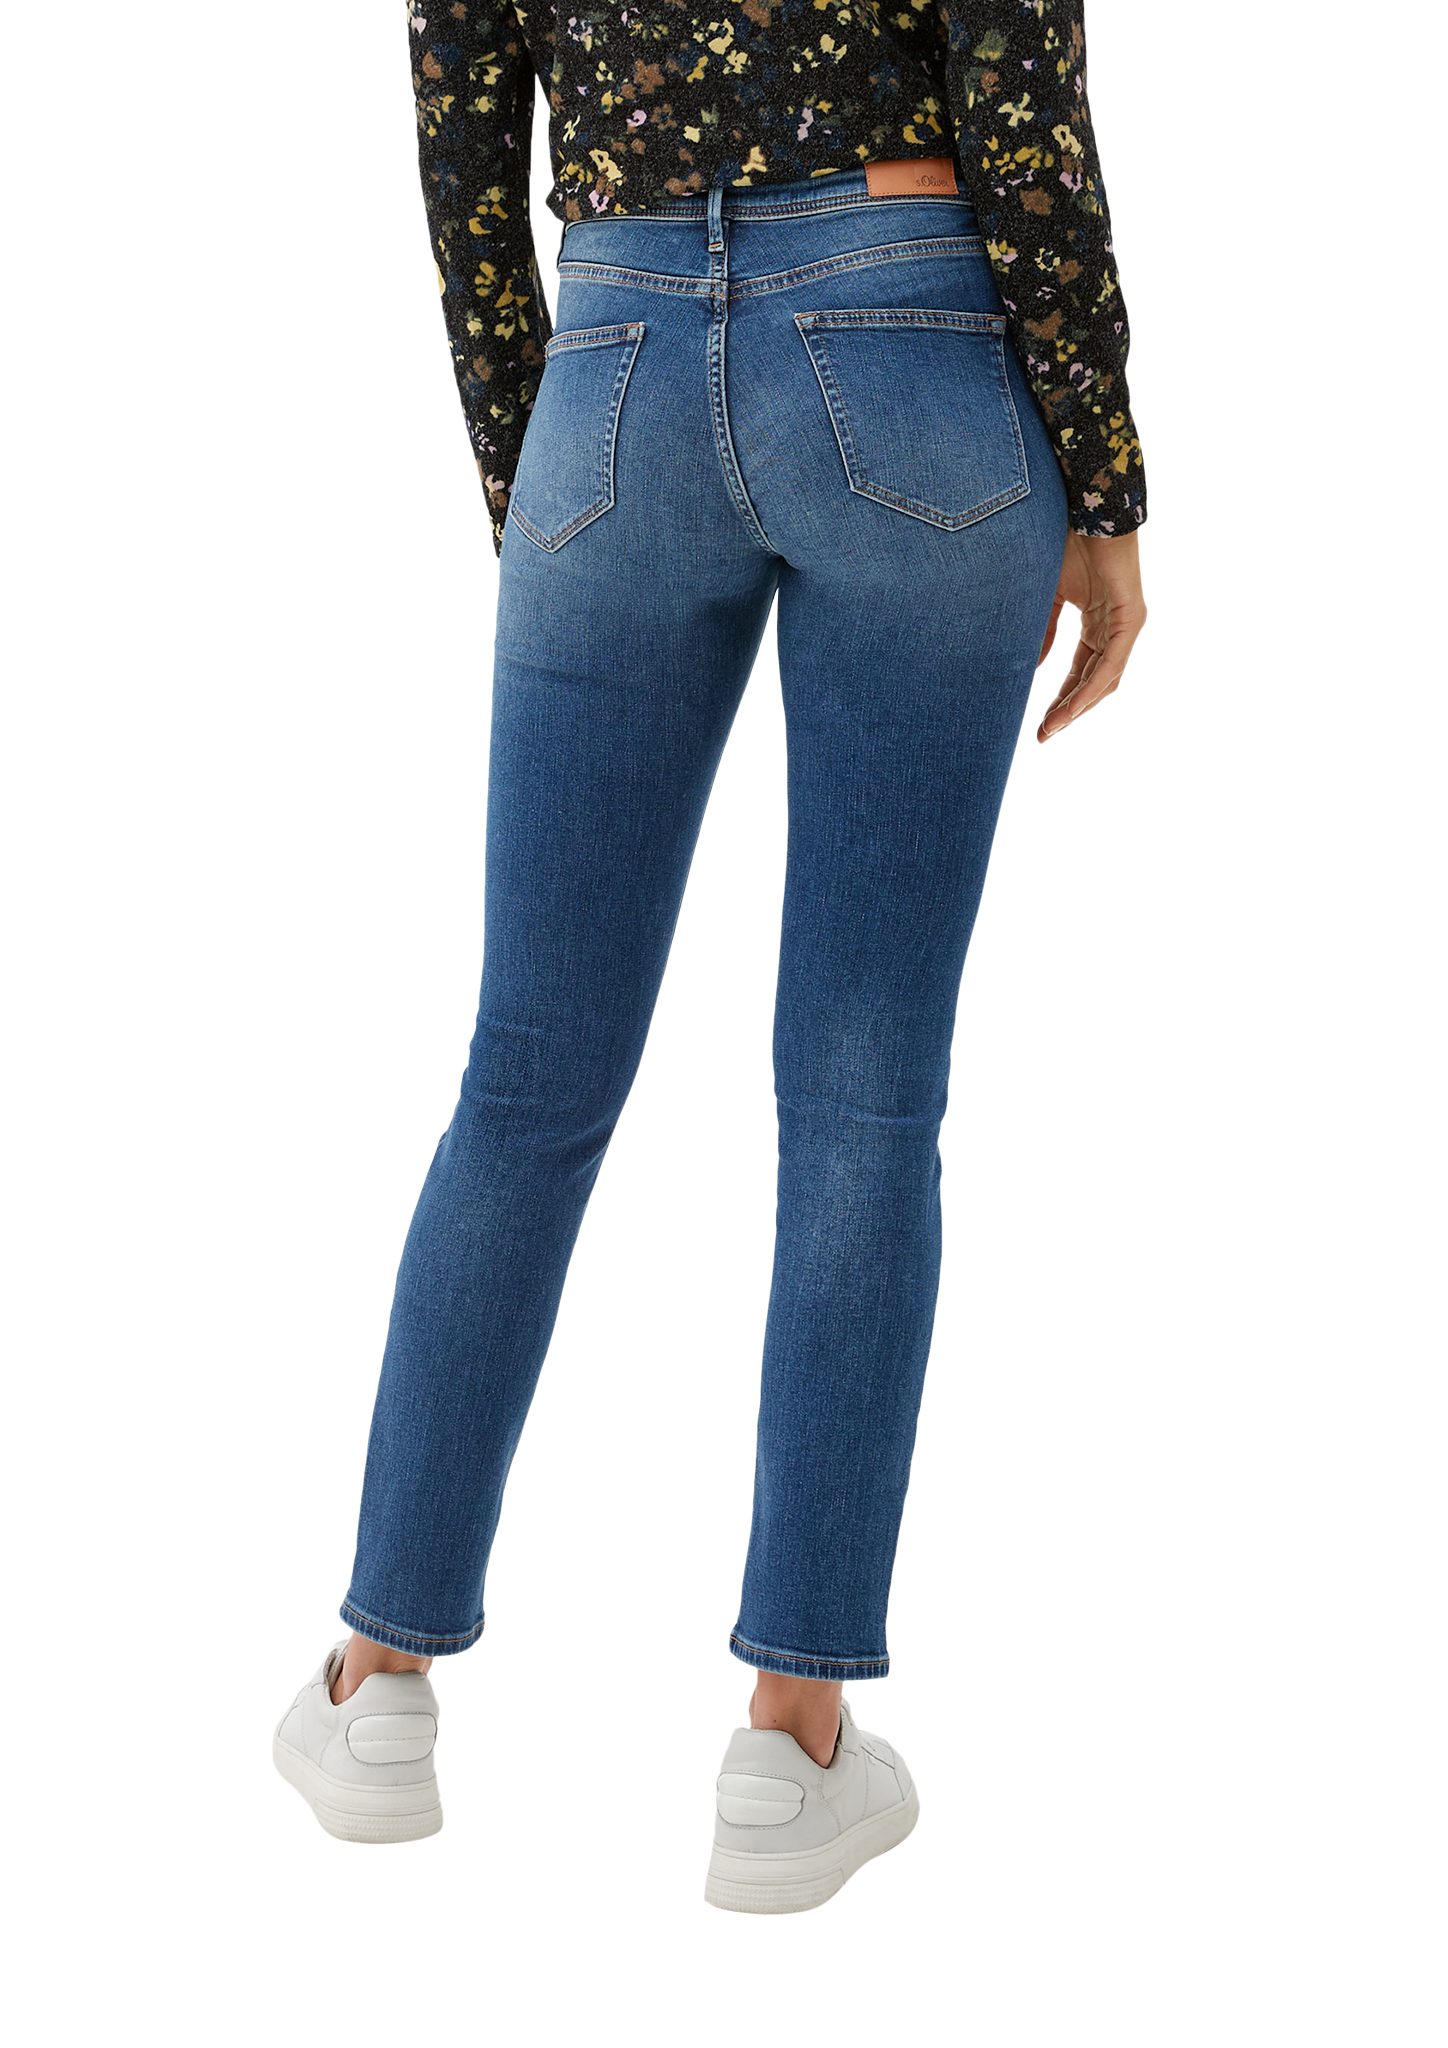 s.Oliver 5-Pocket-Jeans Waschung / Jeans Betsy / Slim himmelblau Leg / Mid Slim Rise Fit